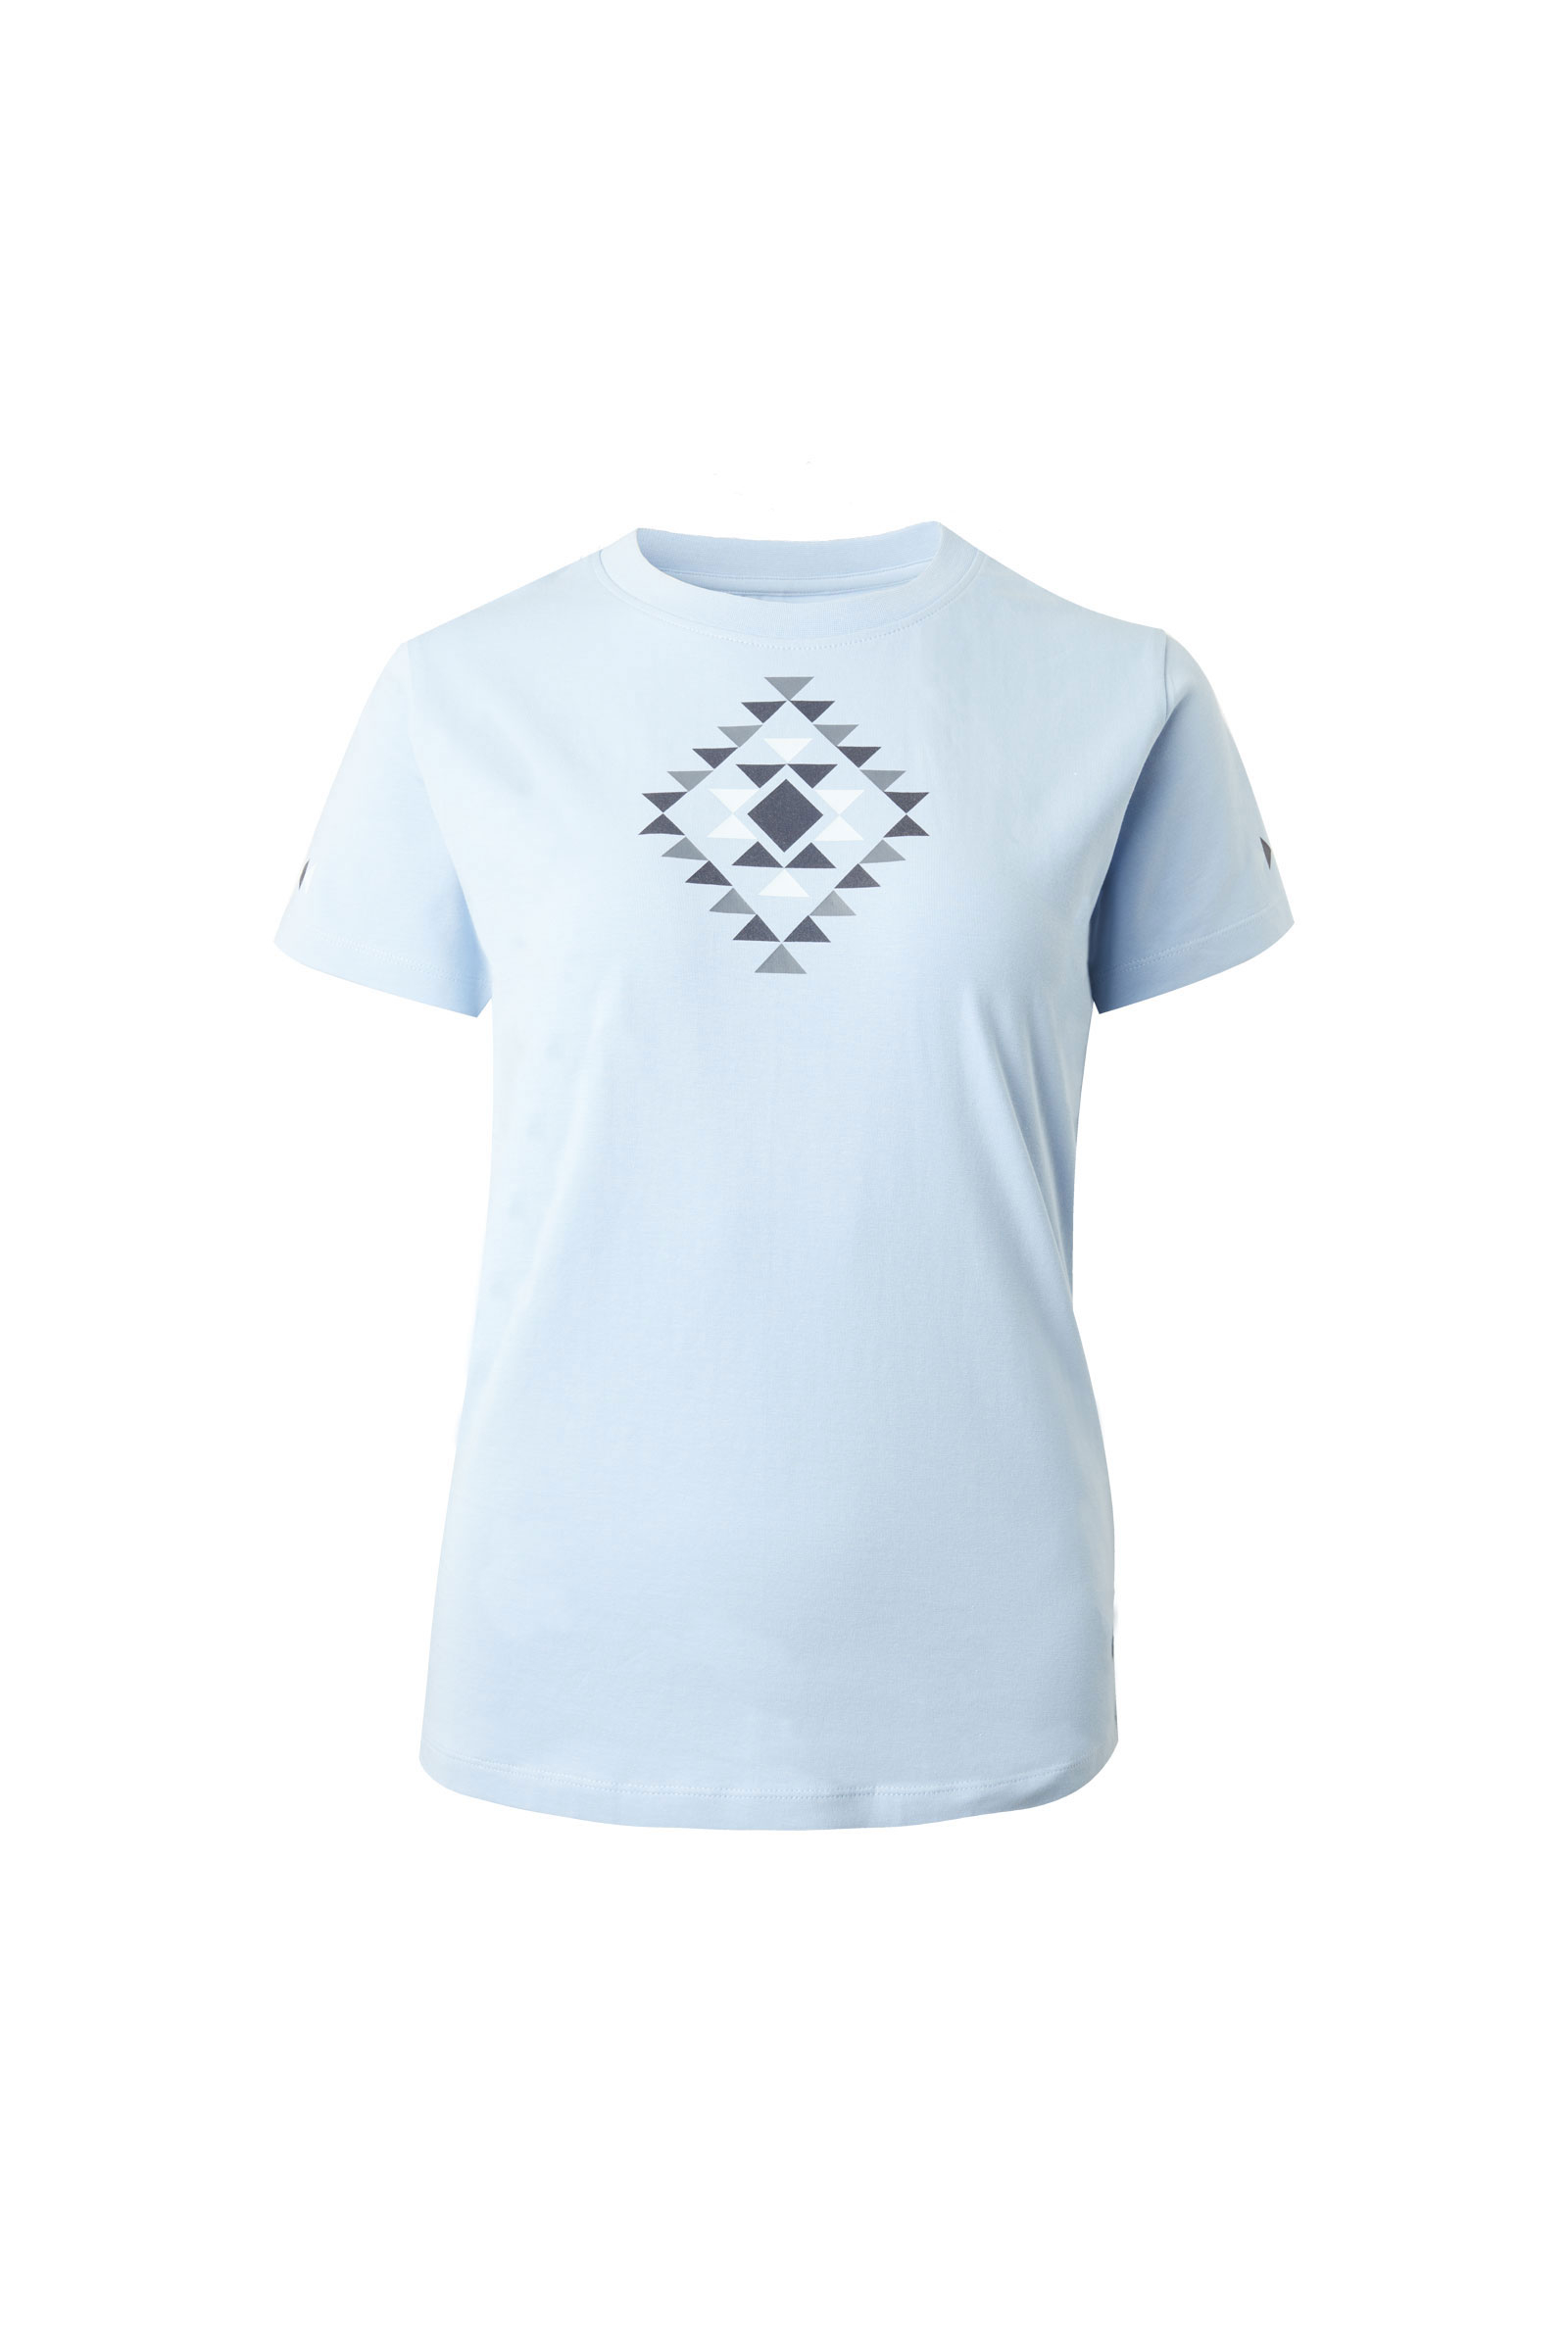 Køb Horze T-shirt med tryk, damemodel | horze.dk